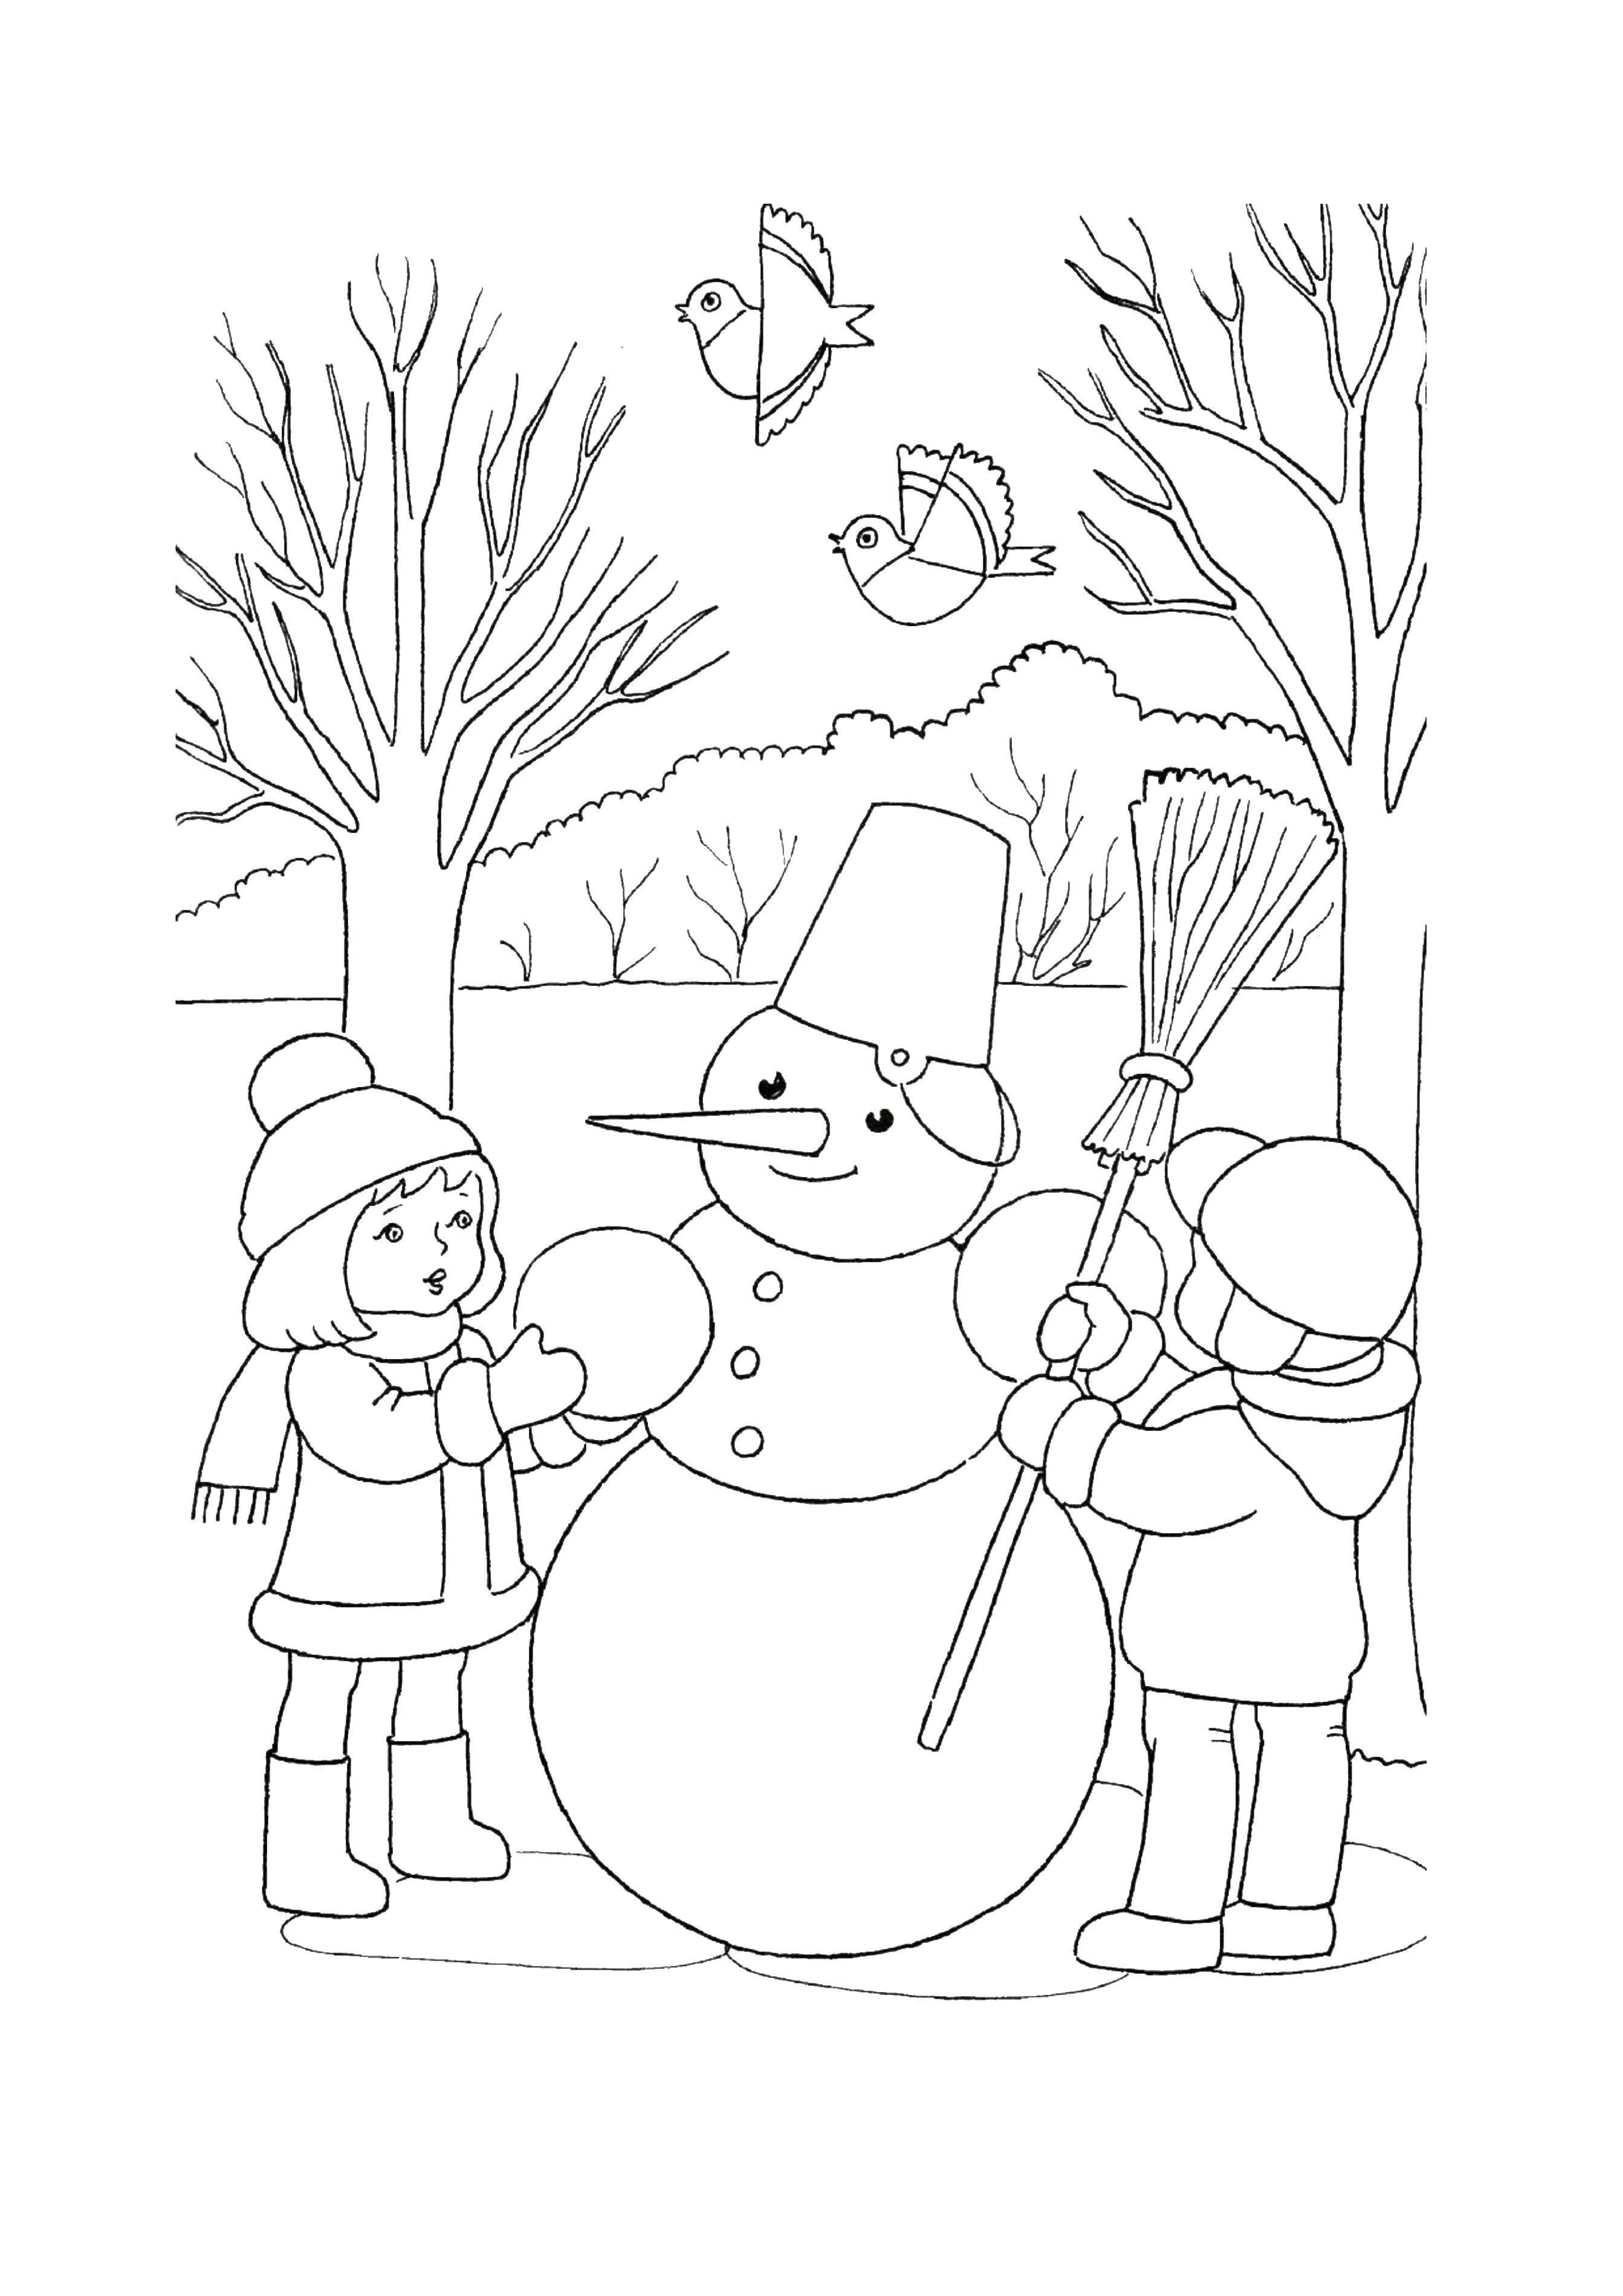 Название: Раскраска Дети лепят снеговика с метлой. Категория: зима. Теги: дети, снеговик, метла.